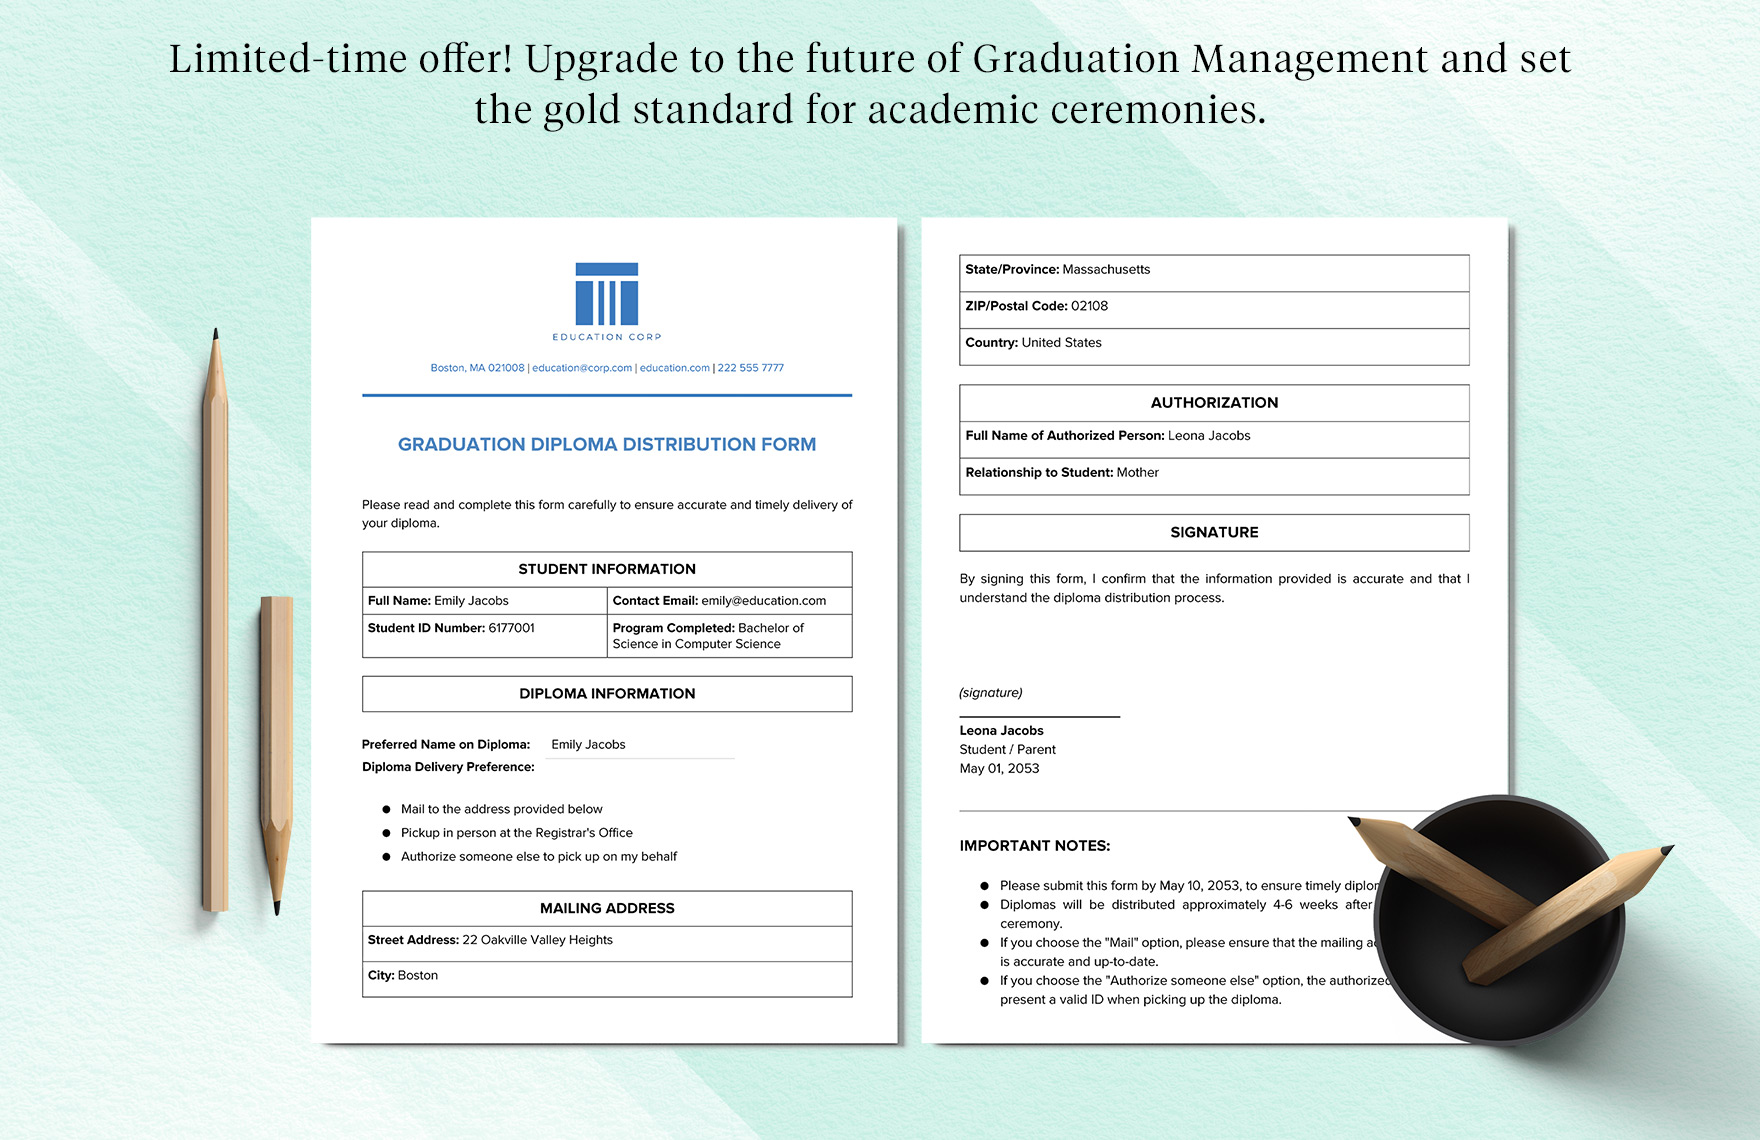 Graduation Diploma Distribution Form Template